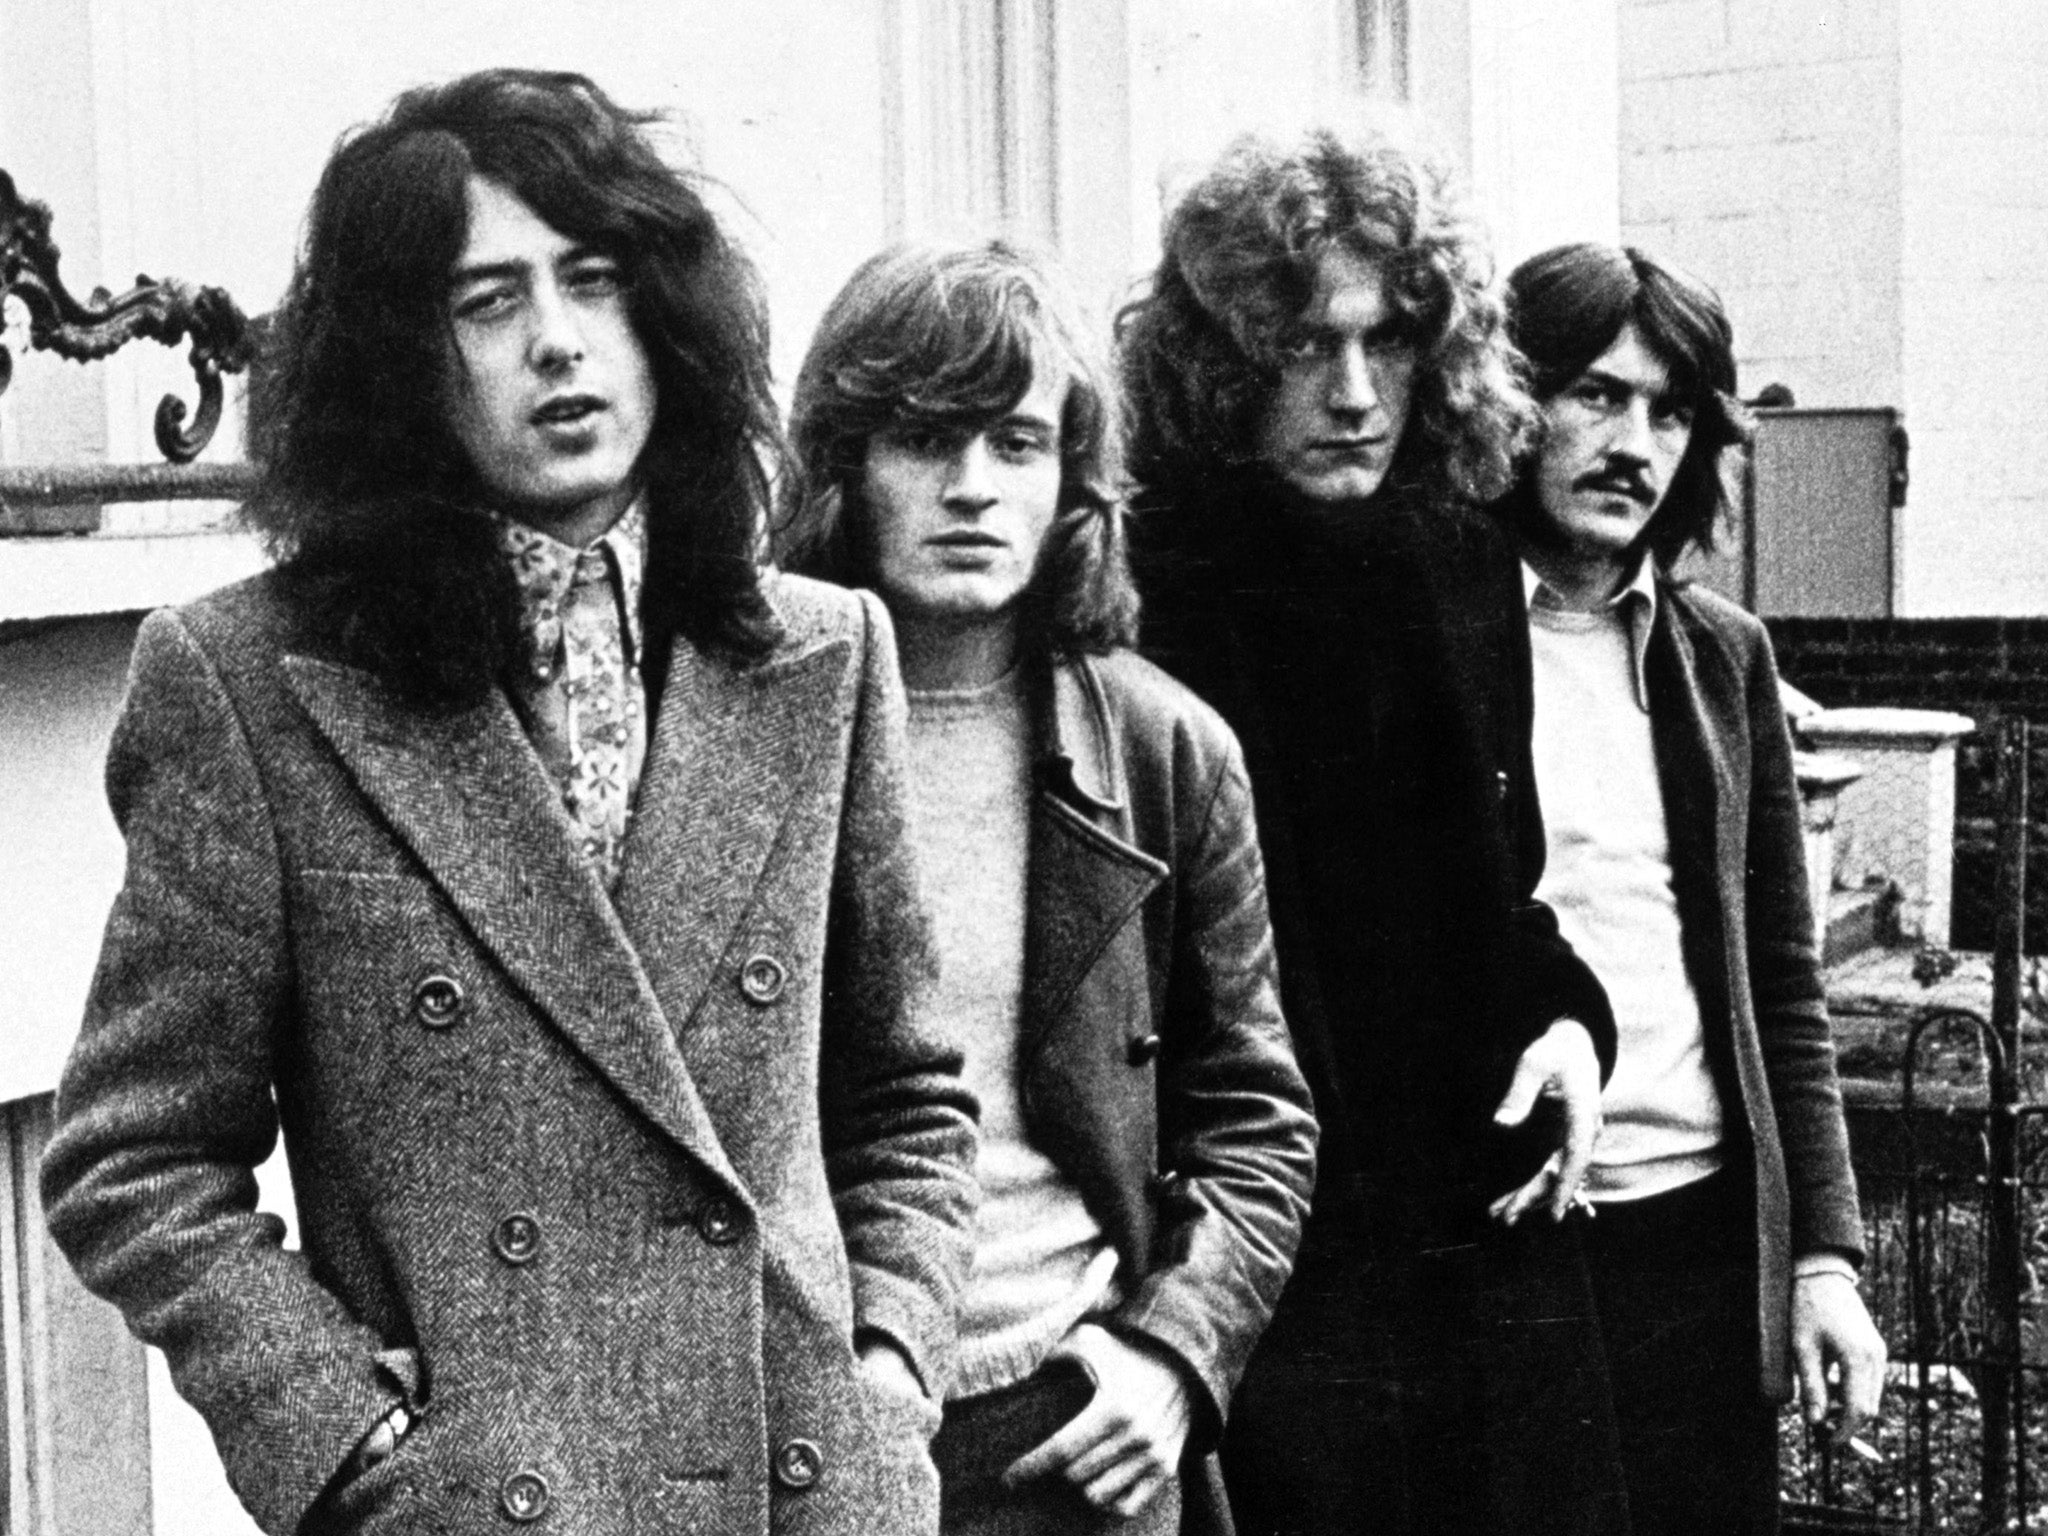 Jimmy Page, John Paul Jones, Robert Plant and John Bonham of Led Zeppelin in 1969